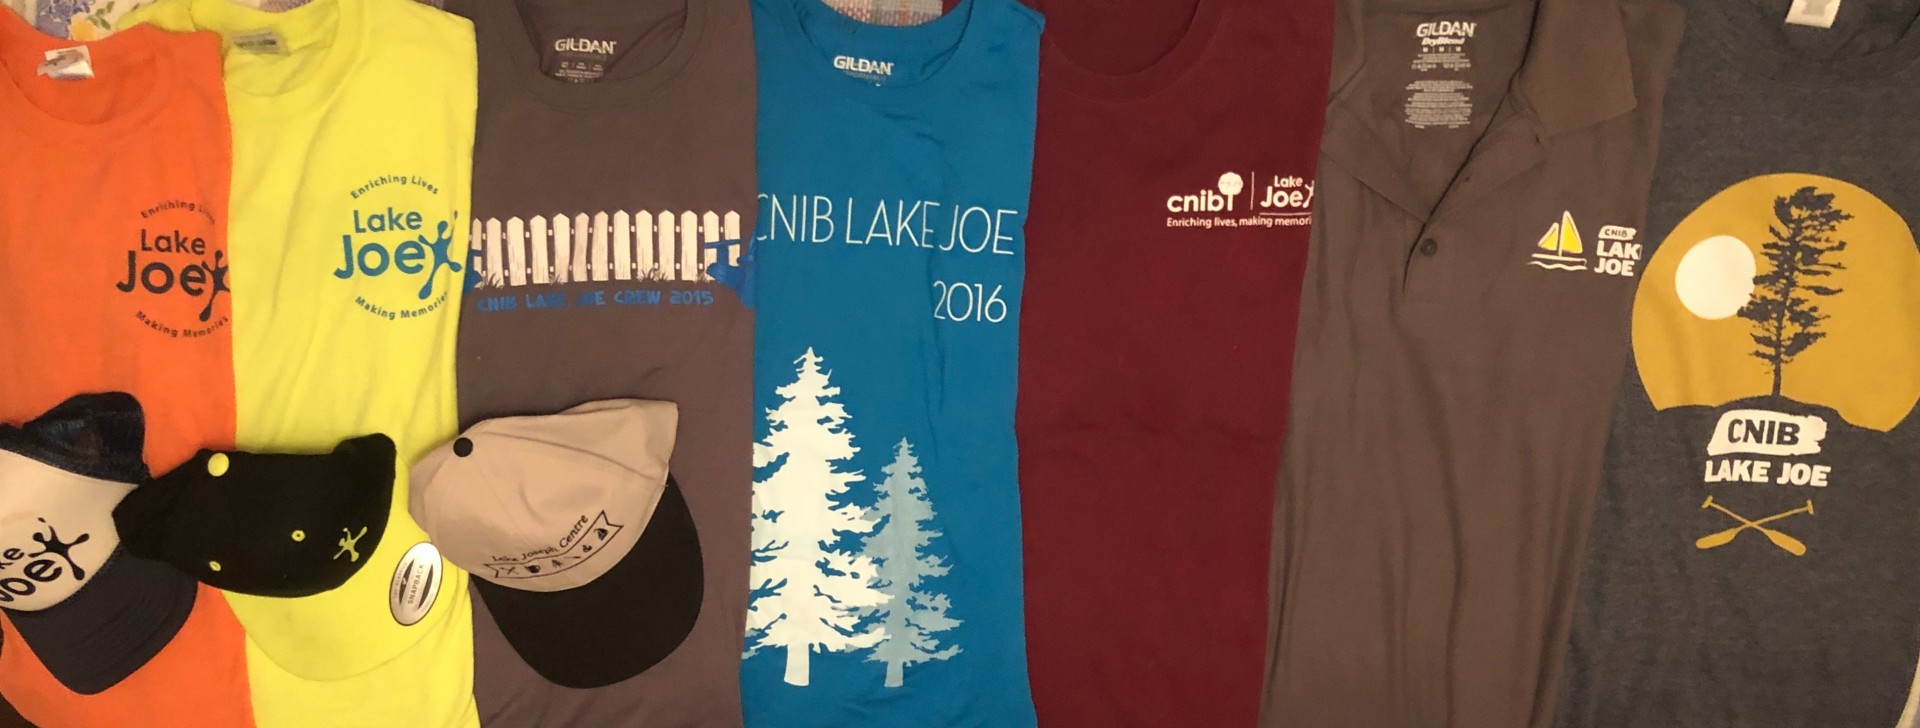 CNIB Lake Joe T-shirts through the years (orange, yellow, brown, blue, red, light grey, and dark grey)